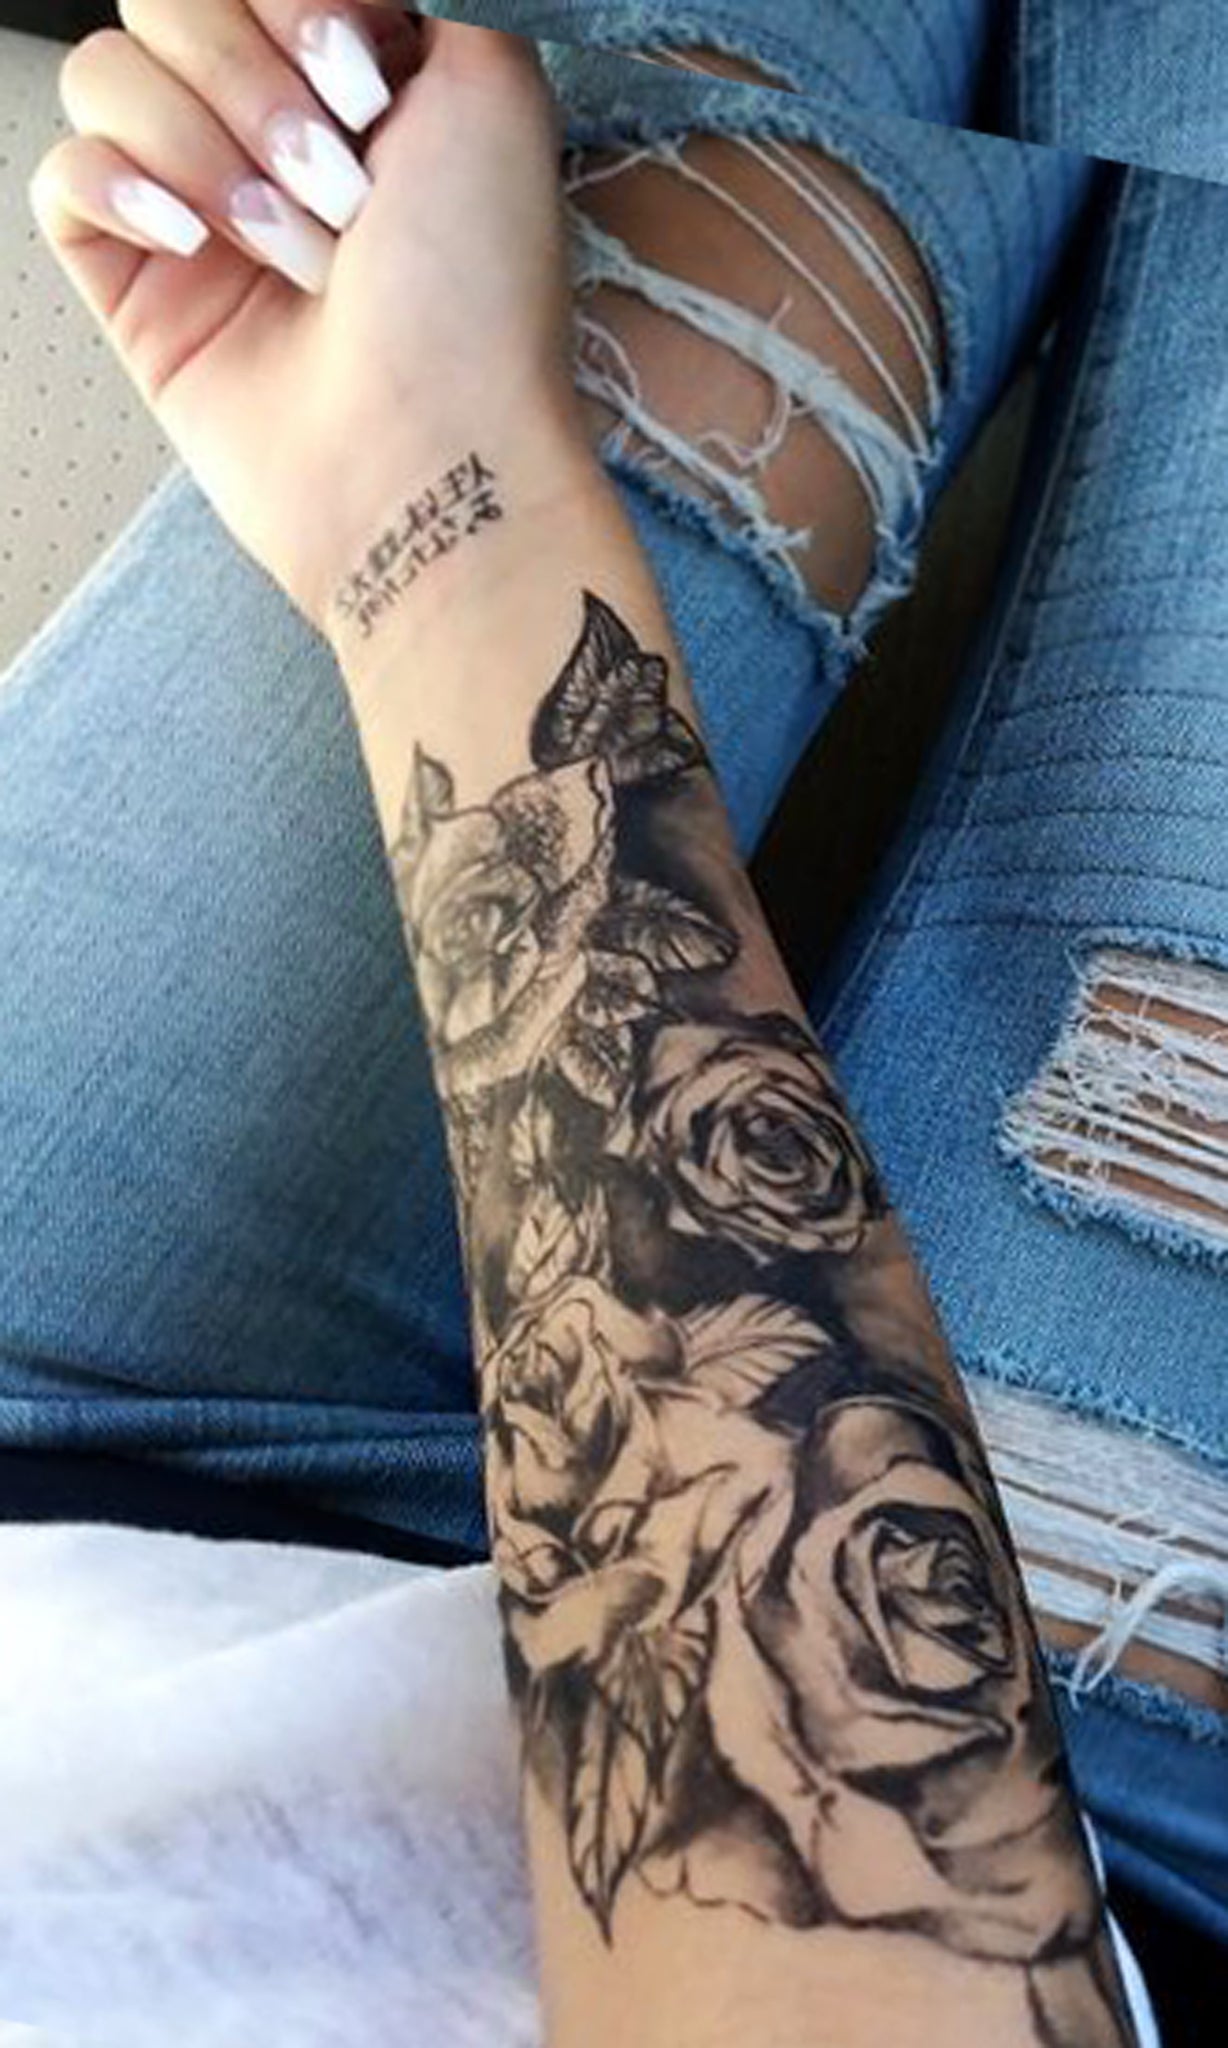 Black Rose Forearm Tattoo Ideas for Women - Realistic Floral Flower Arm Sleeve Tat -  ideas de tatuaje de antebrazo rosa para mujeres - www.MyBodiArt.com